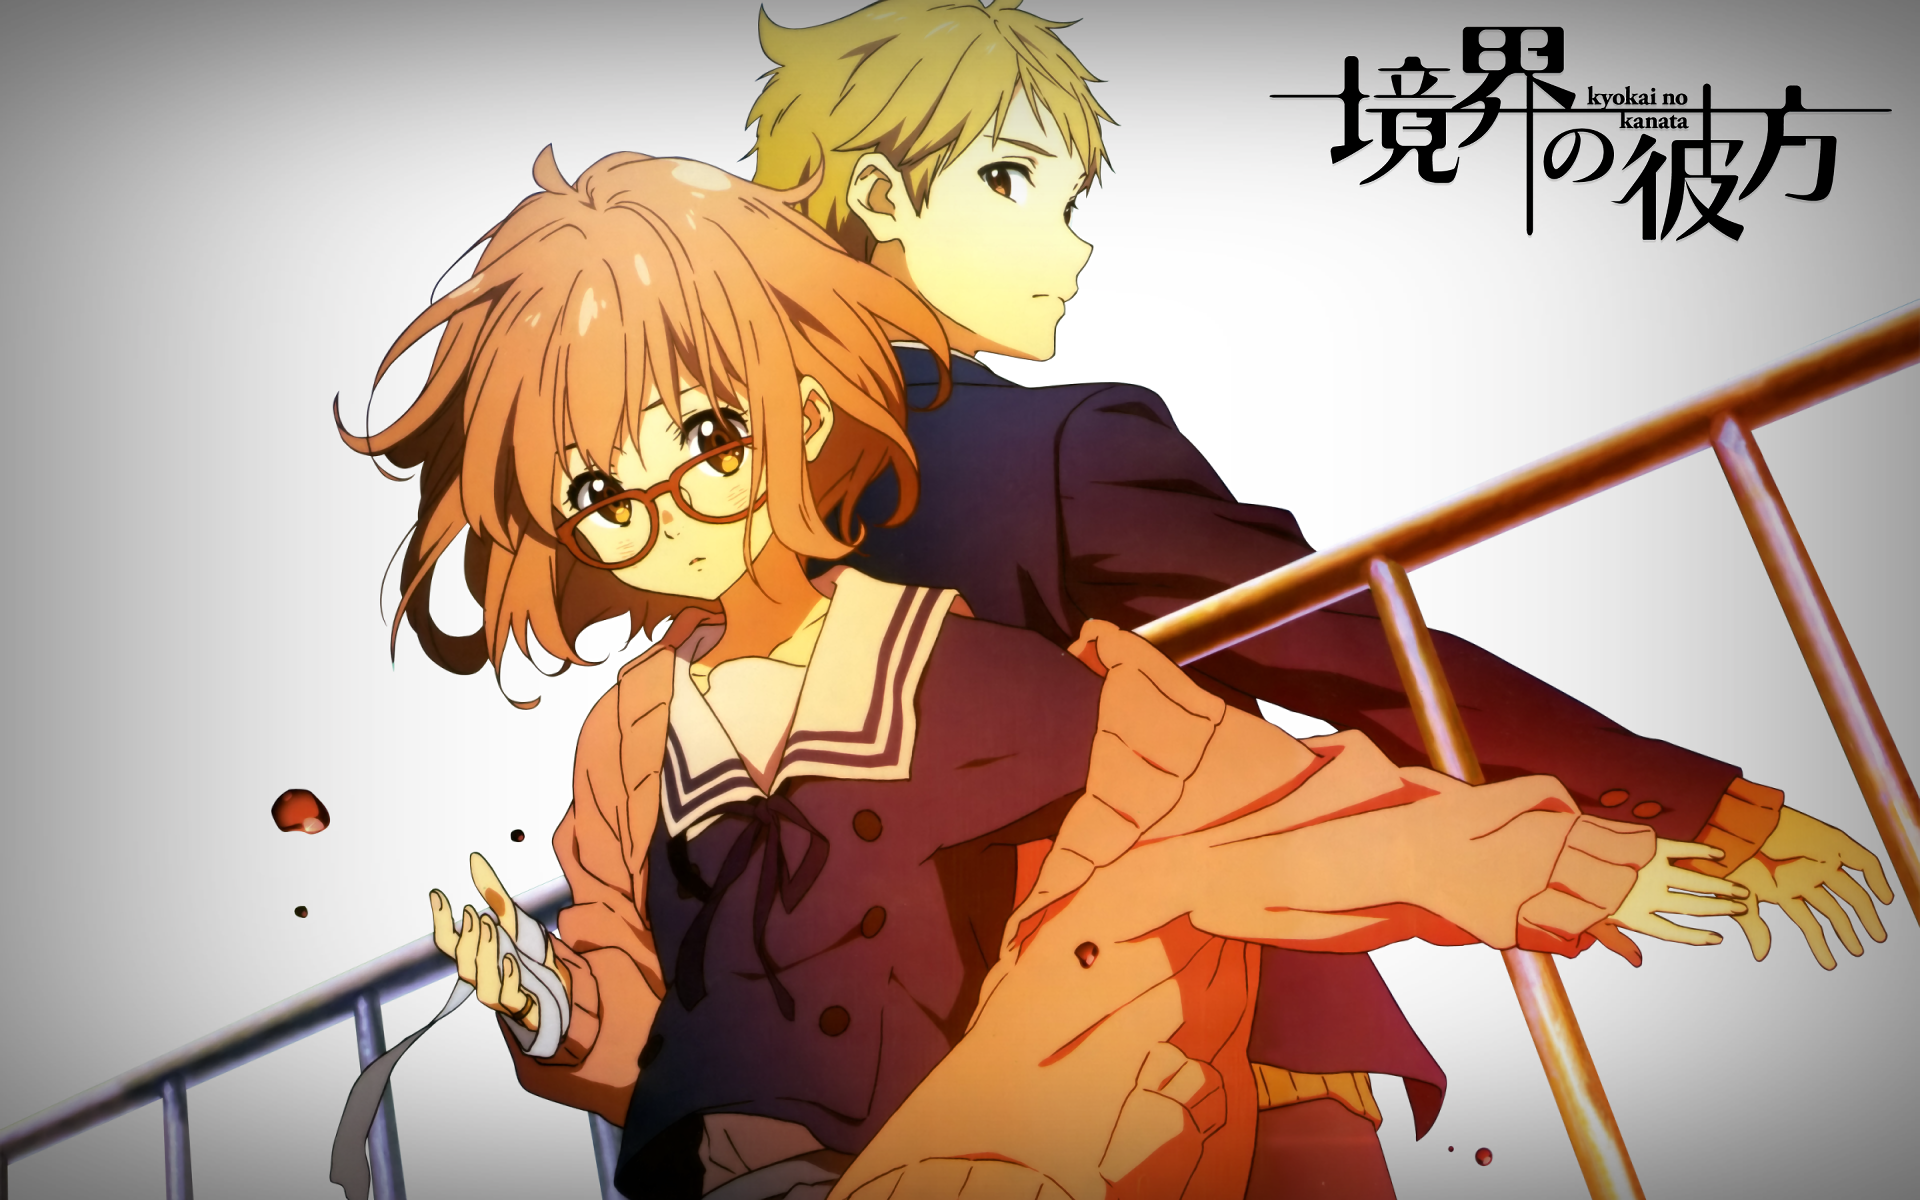 Beyond The Boundary Kyoukai No Kanata Anime Poster – My Hot Posters